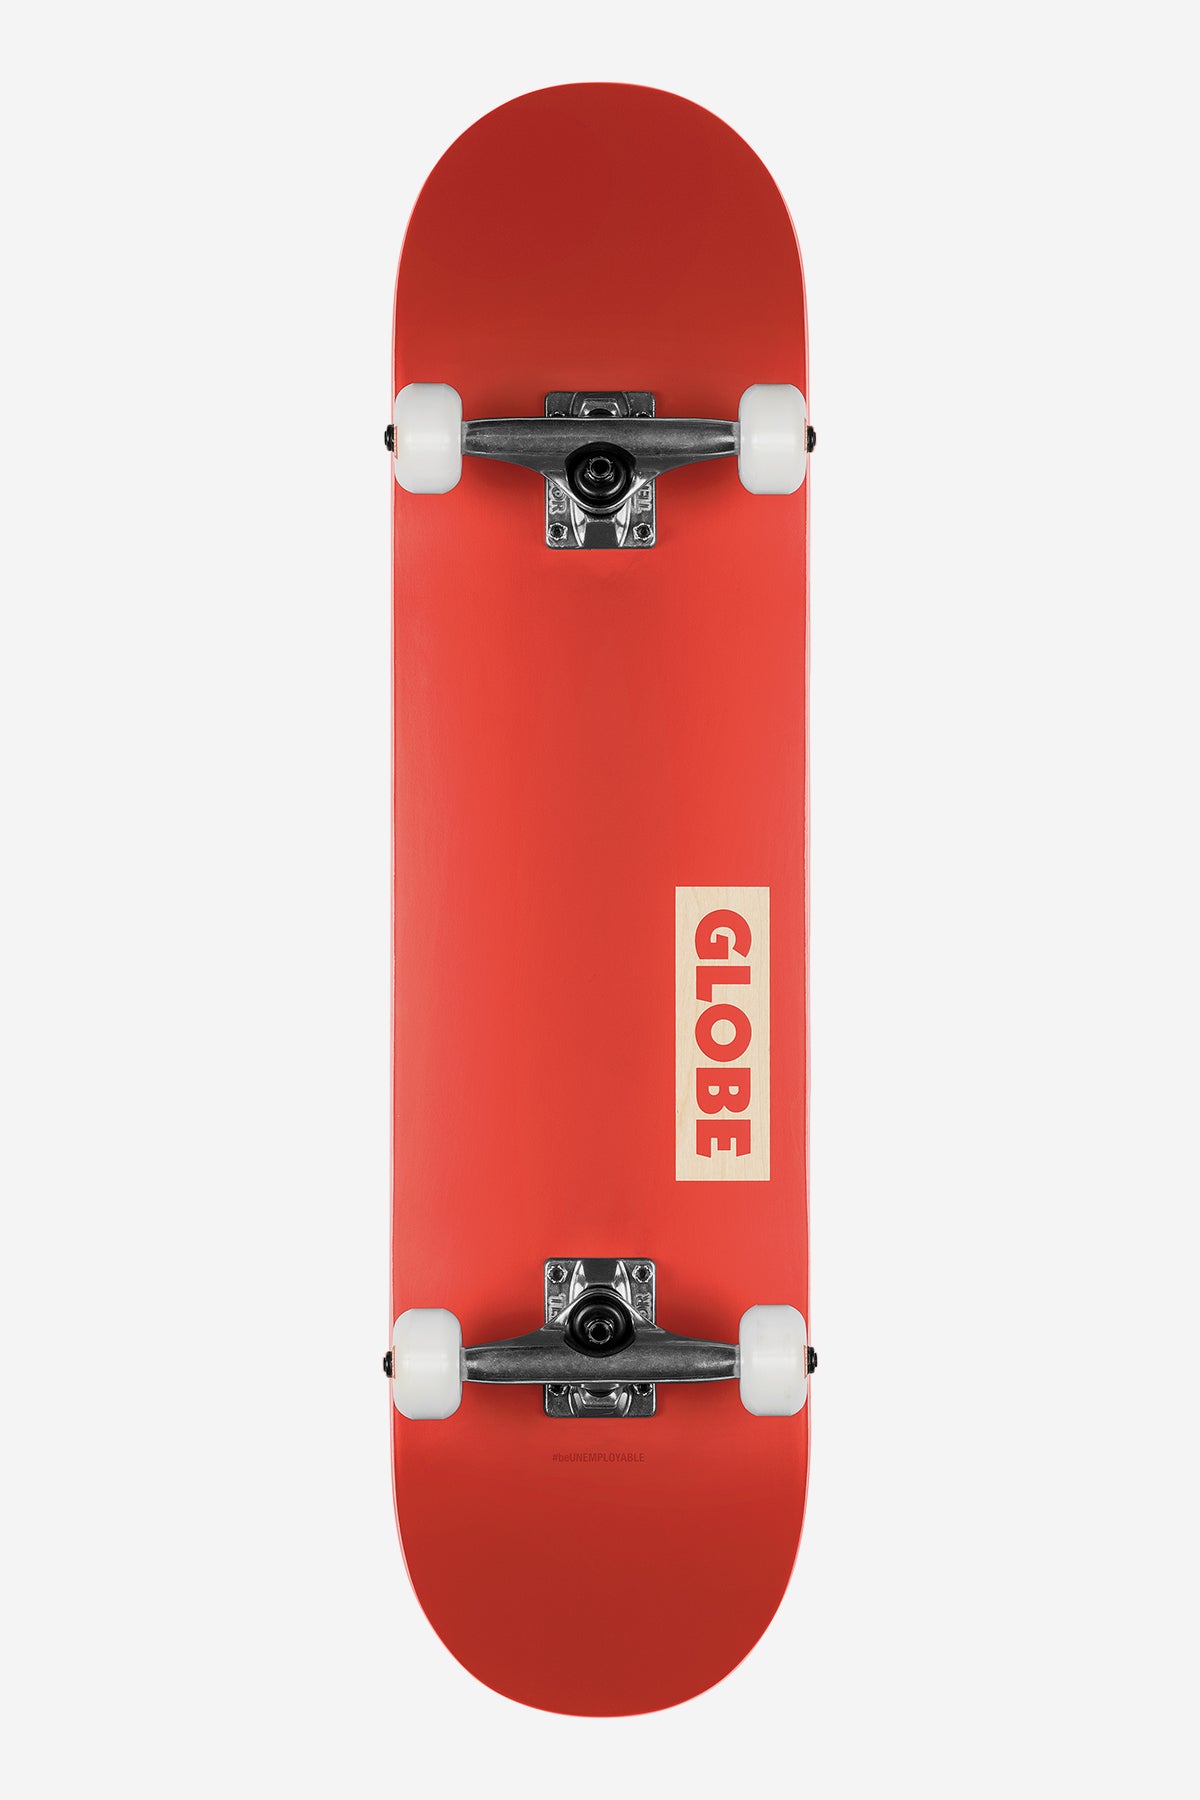 Goodstock - Red - 7.75" Complete Skateboard